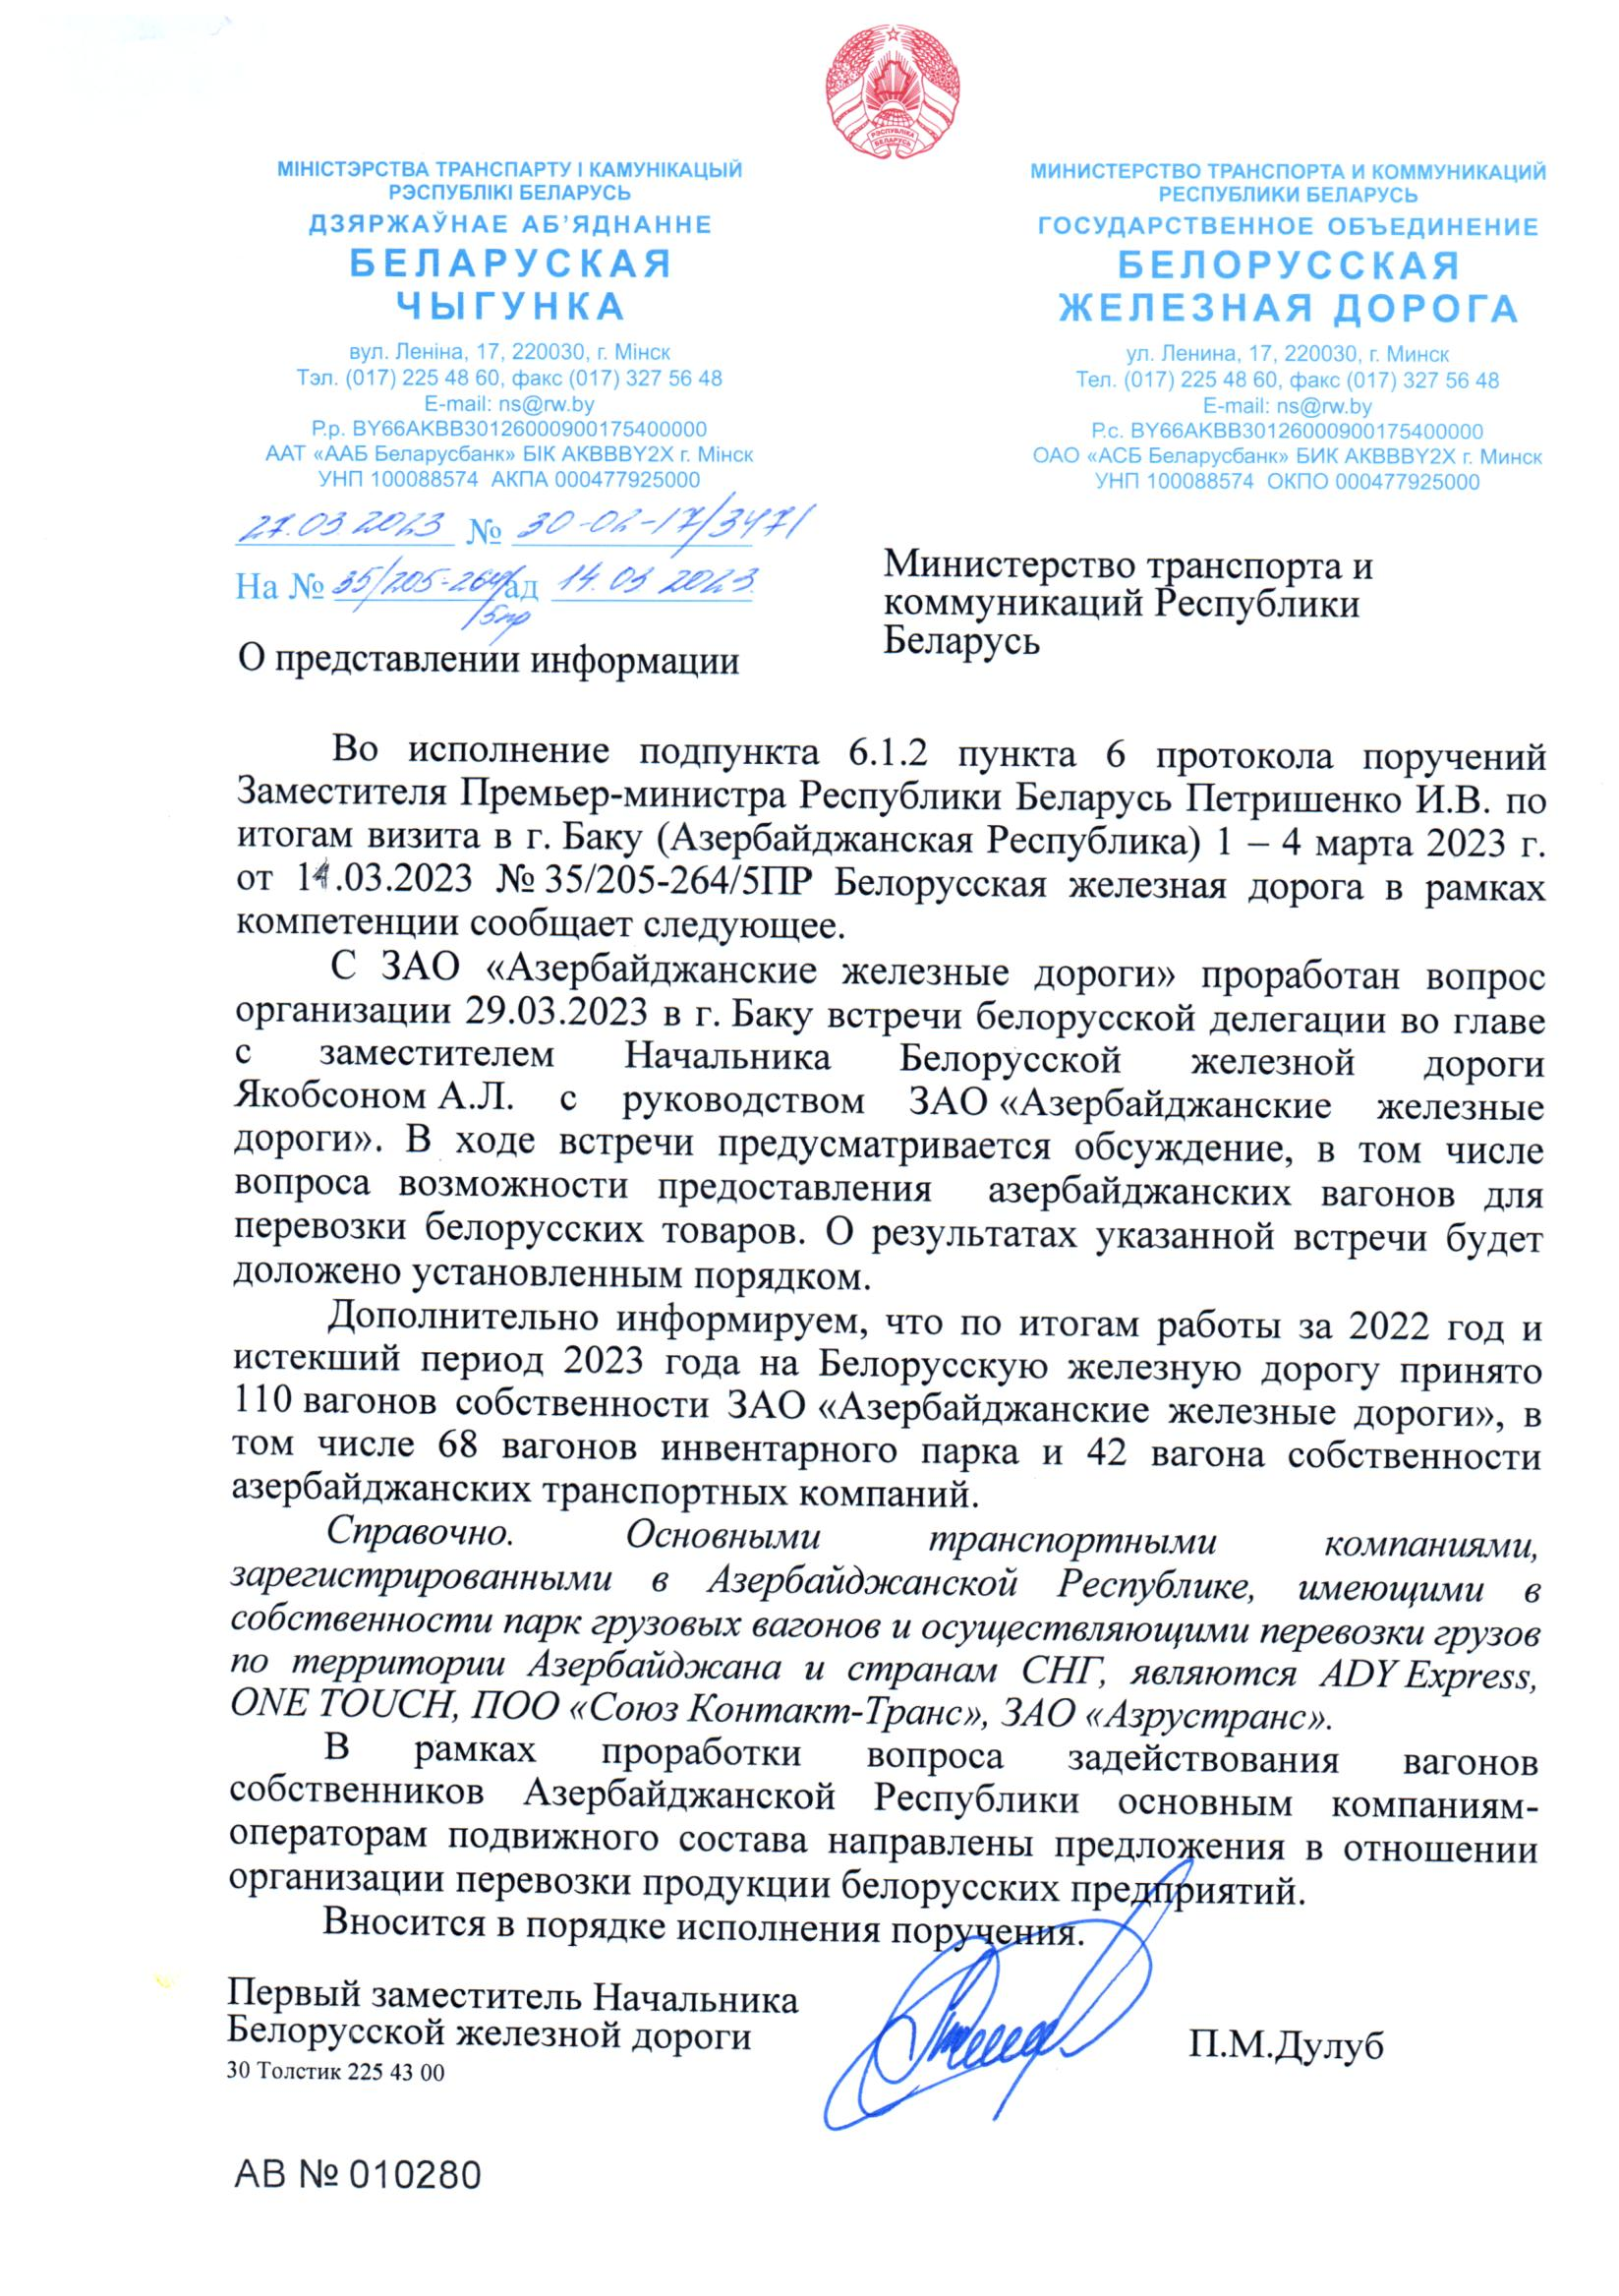 Письмо БЖД в Министерство транспорта от 27.03.2023